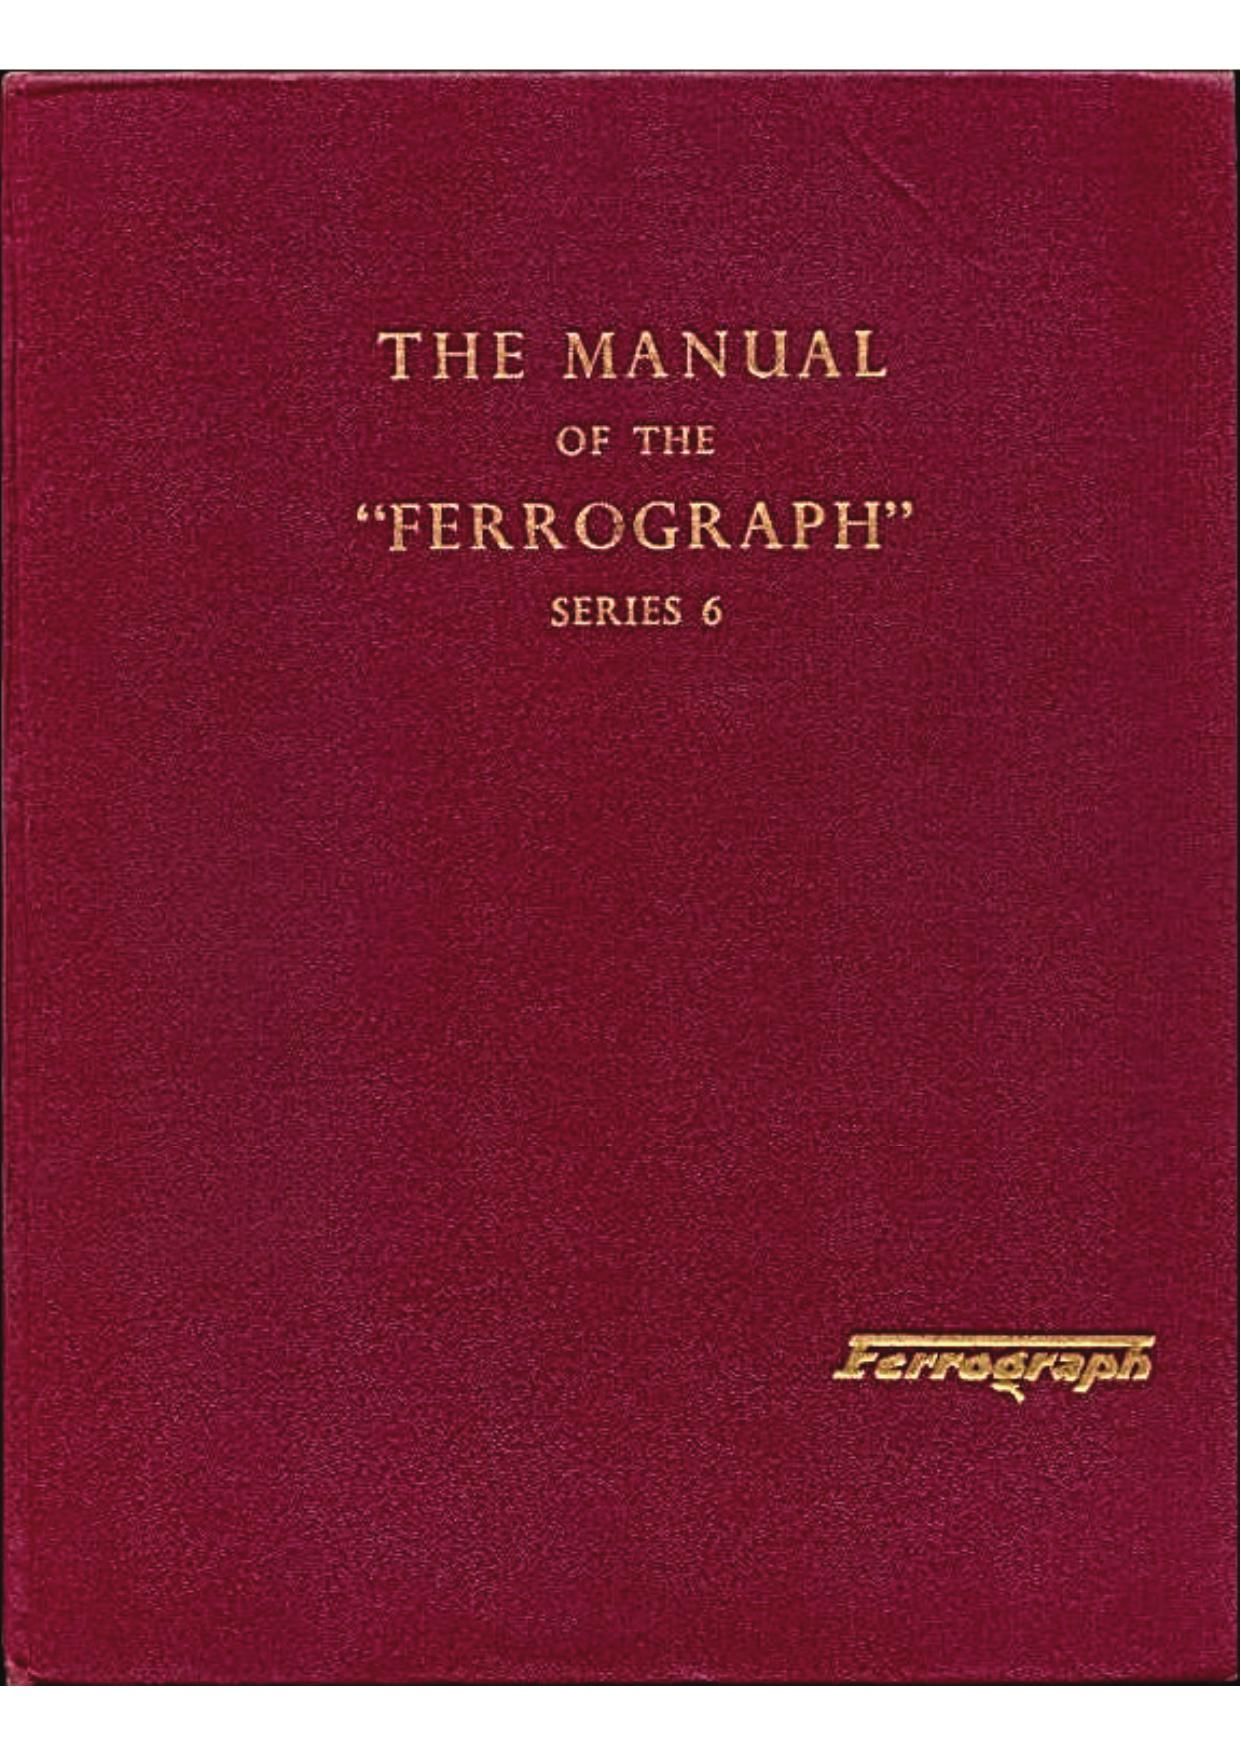 Ferrograph 634 Service Manual